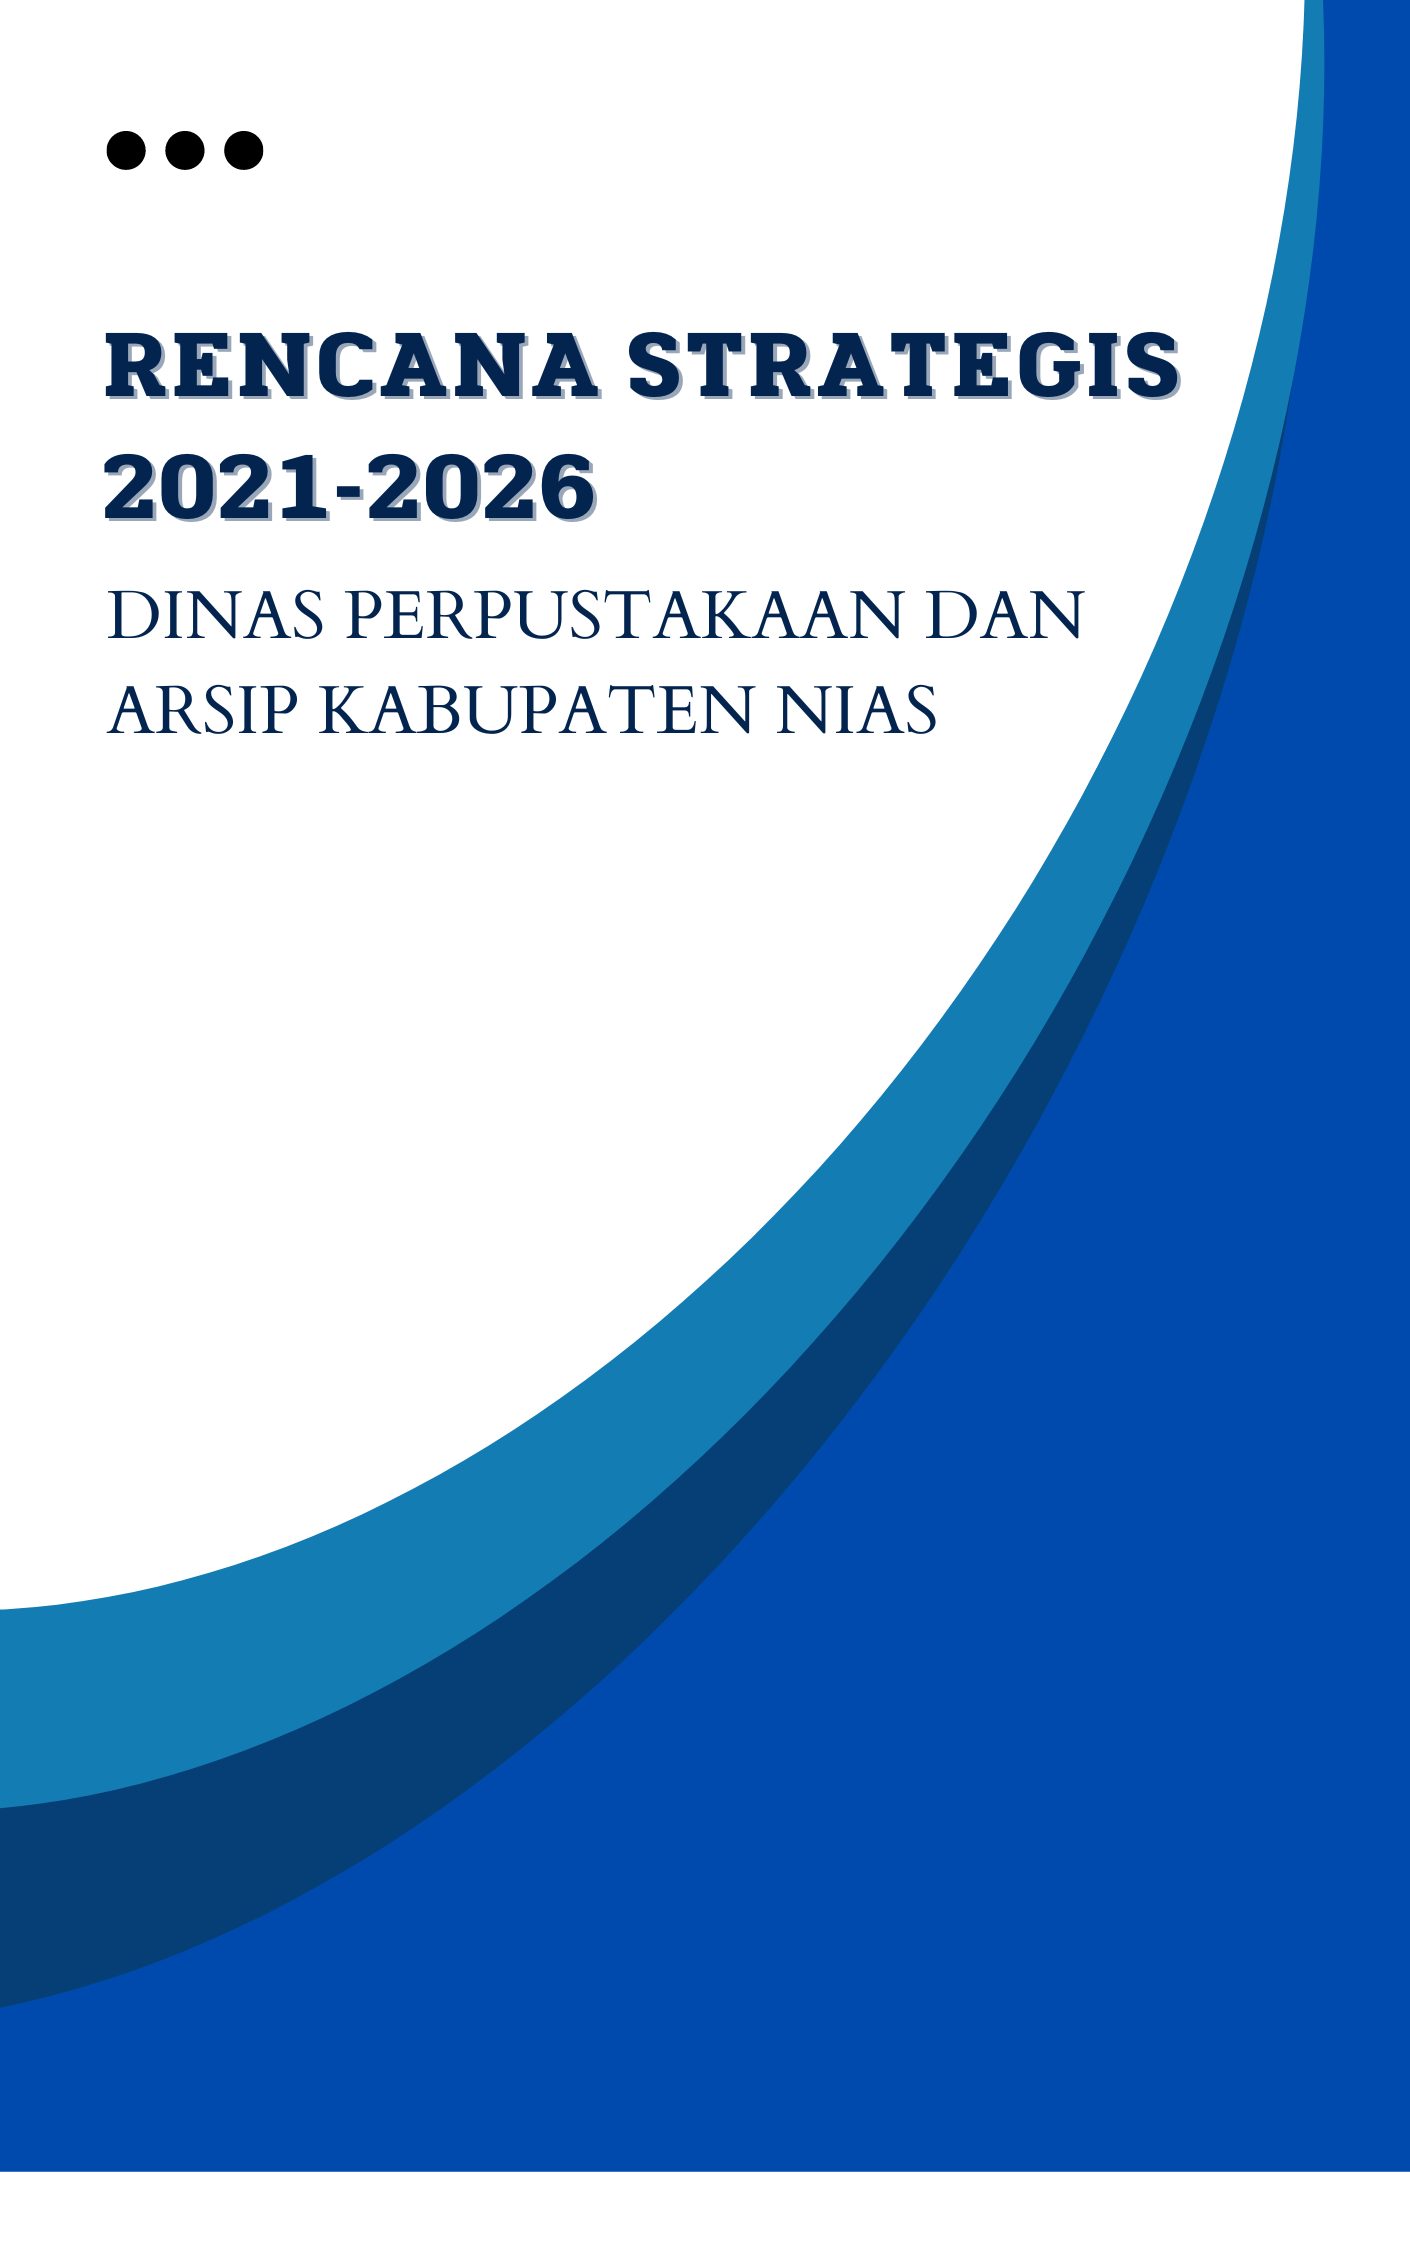 Rencana Strategis Disperpusip Kab. Nias Tahun 2021-2026